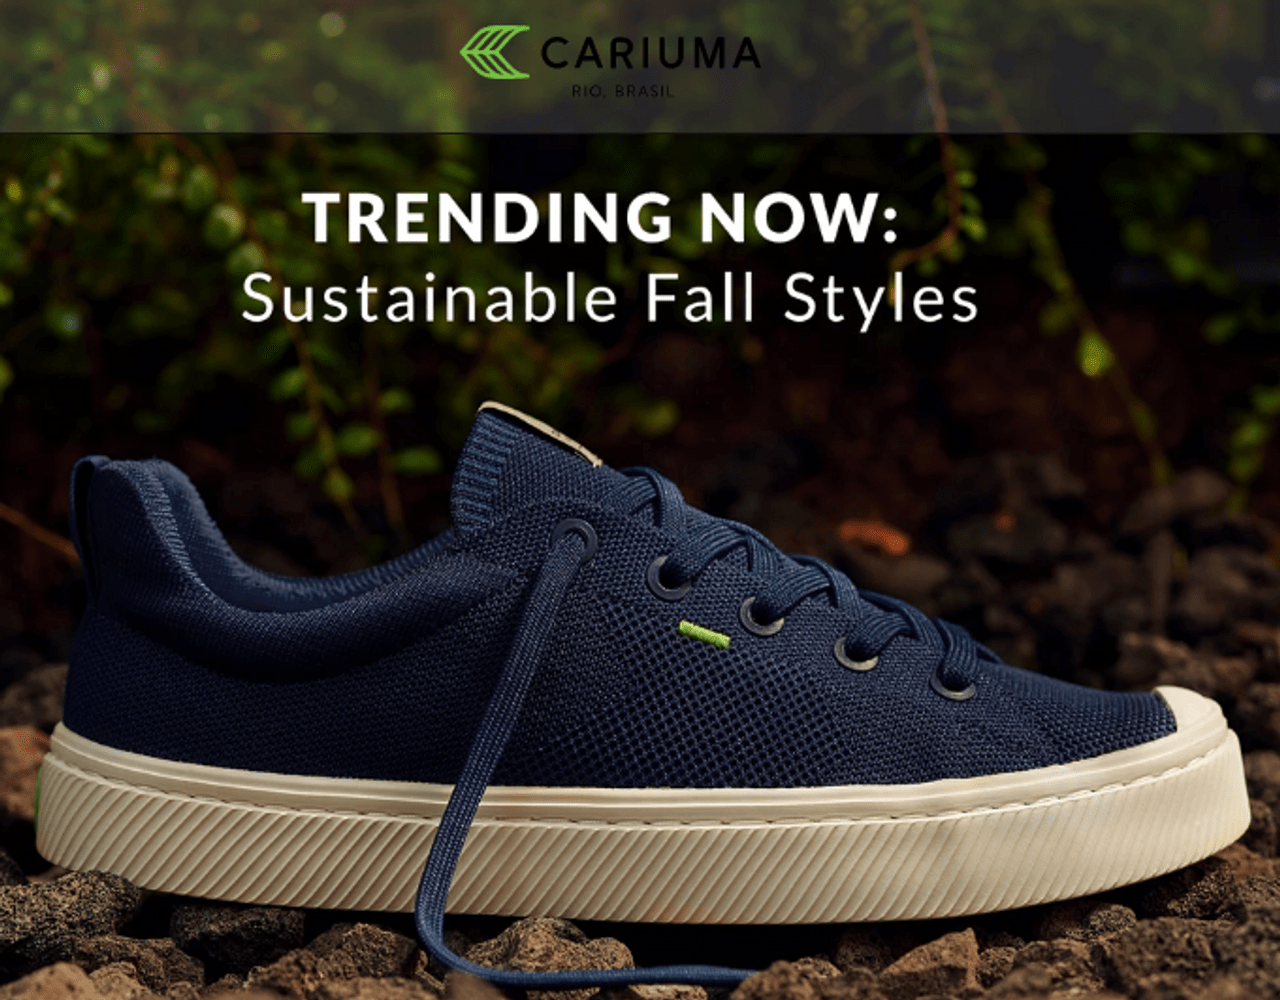 Cariuma: Tα παπούτσια που σέβονται το περιβάλλον και μας εντυπωσίασαν